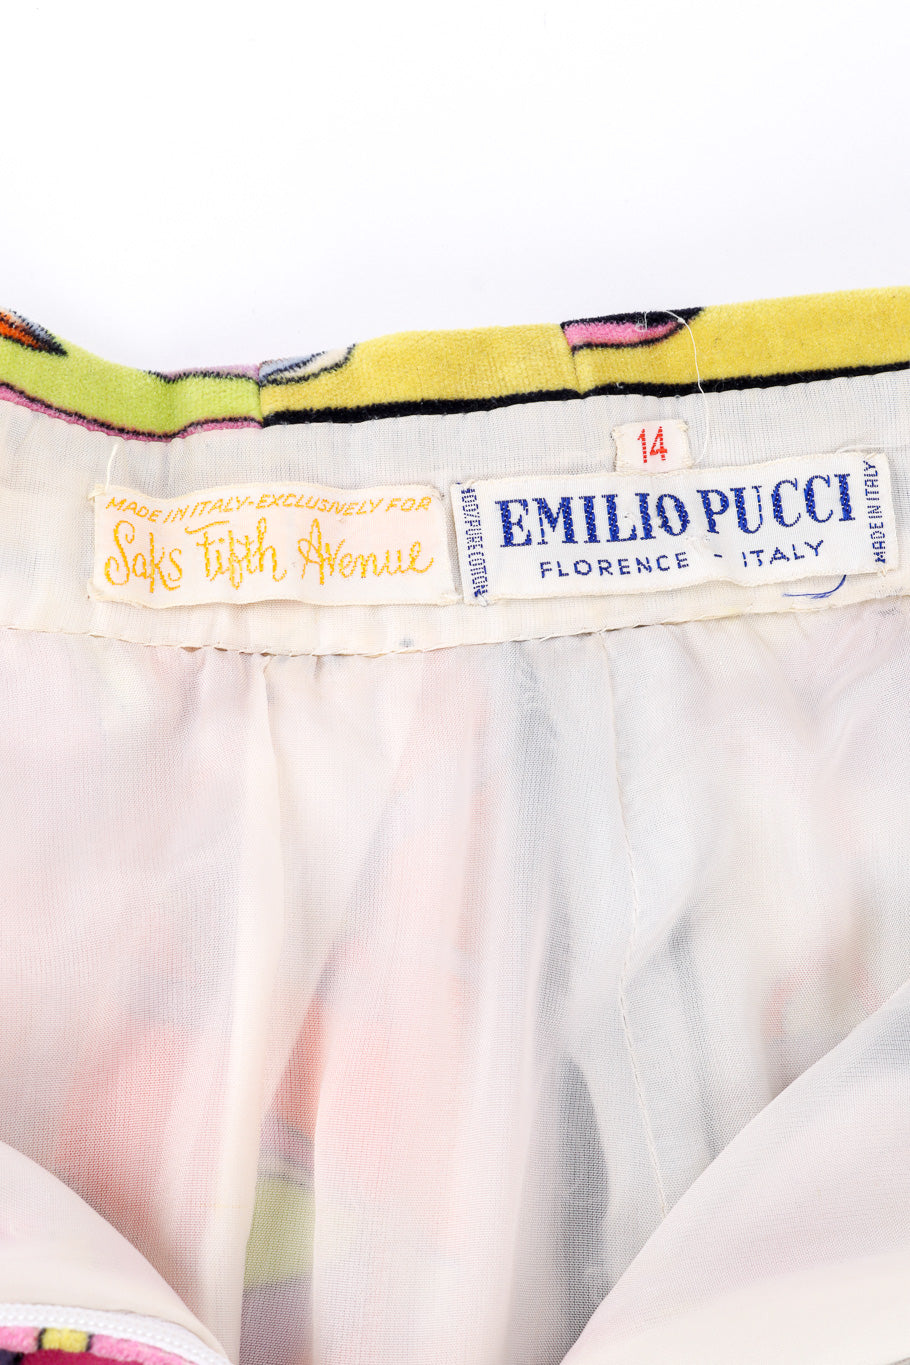 Velvet skirt by Emilio Pucci label @recessla